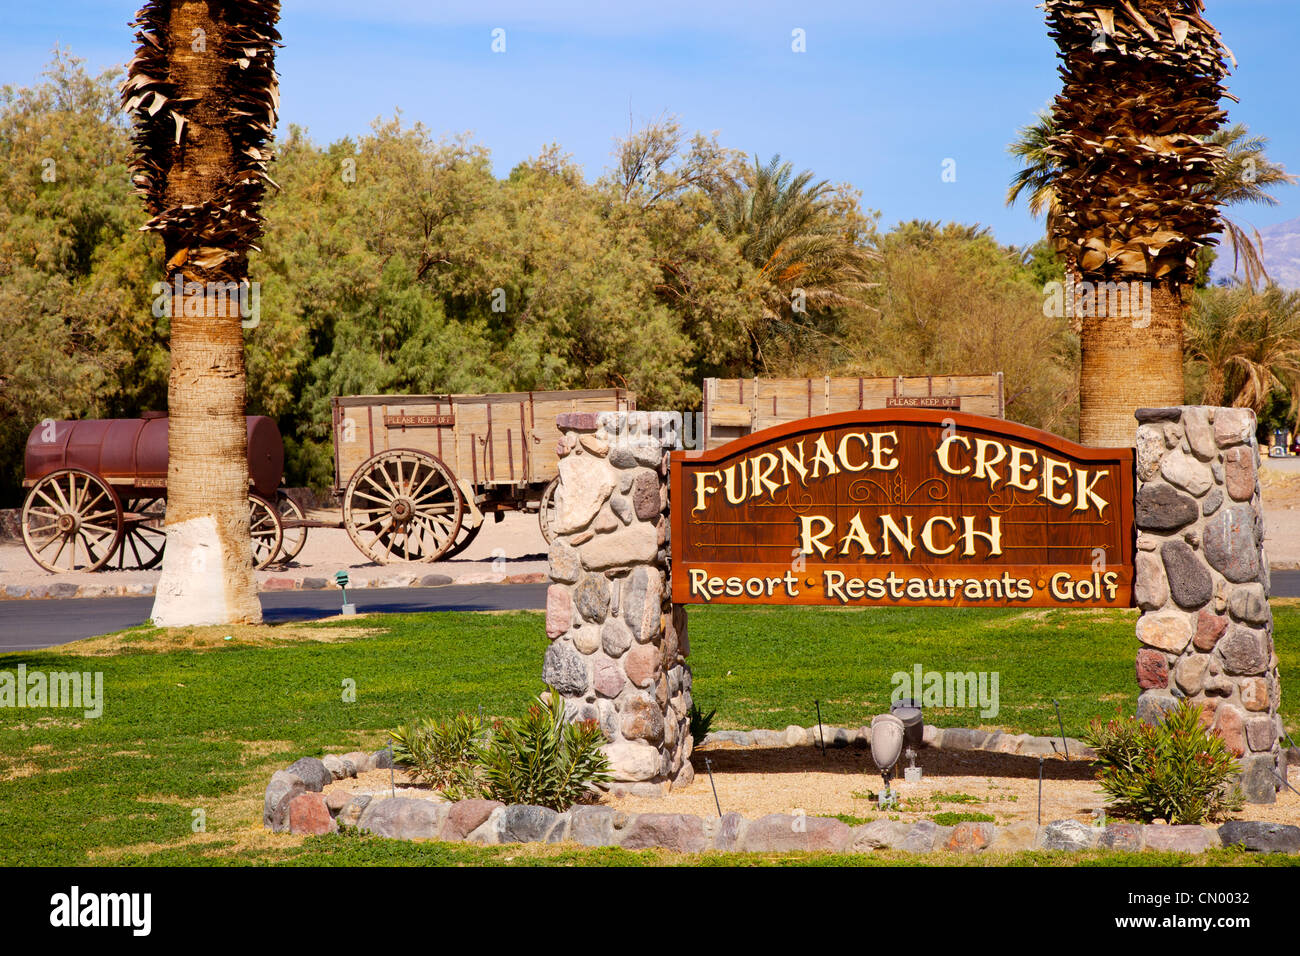 Furnace Creek Resort, Death Valley National Park, California USA Banque D'Images